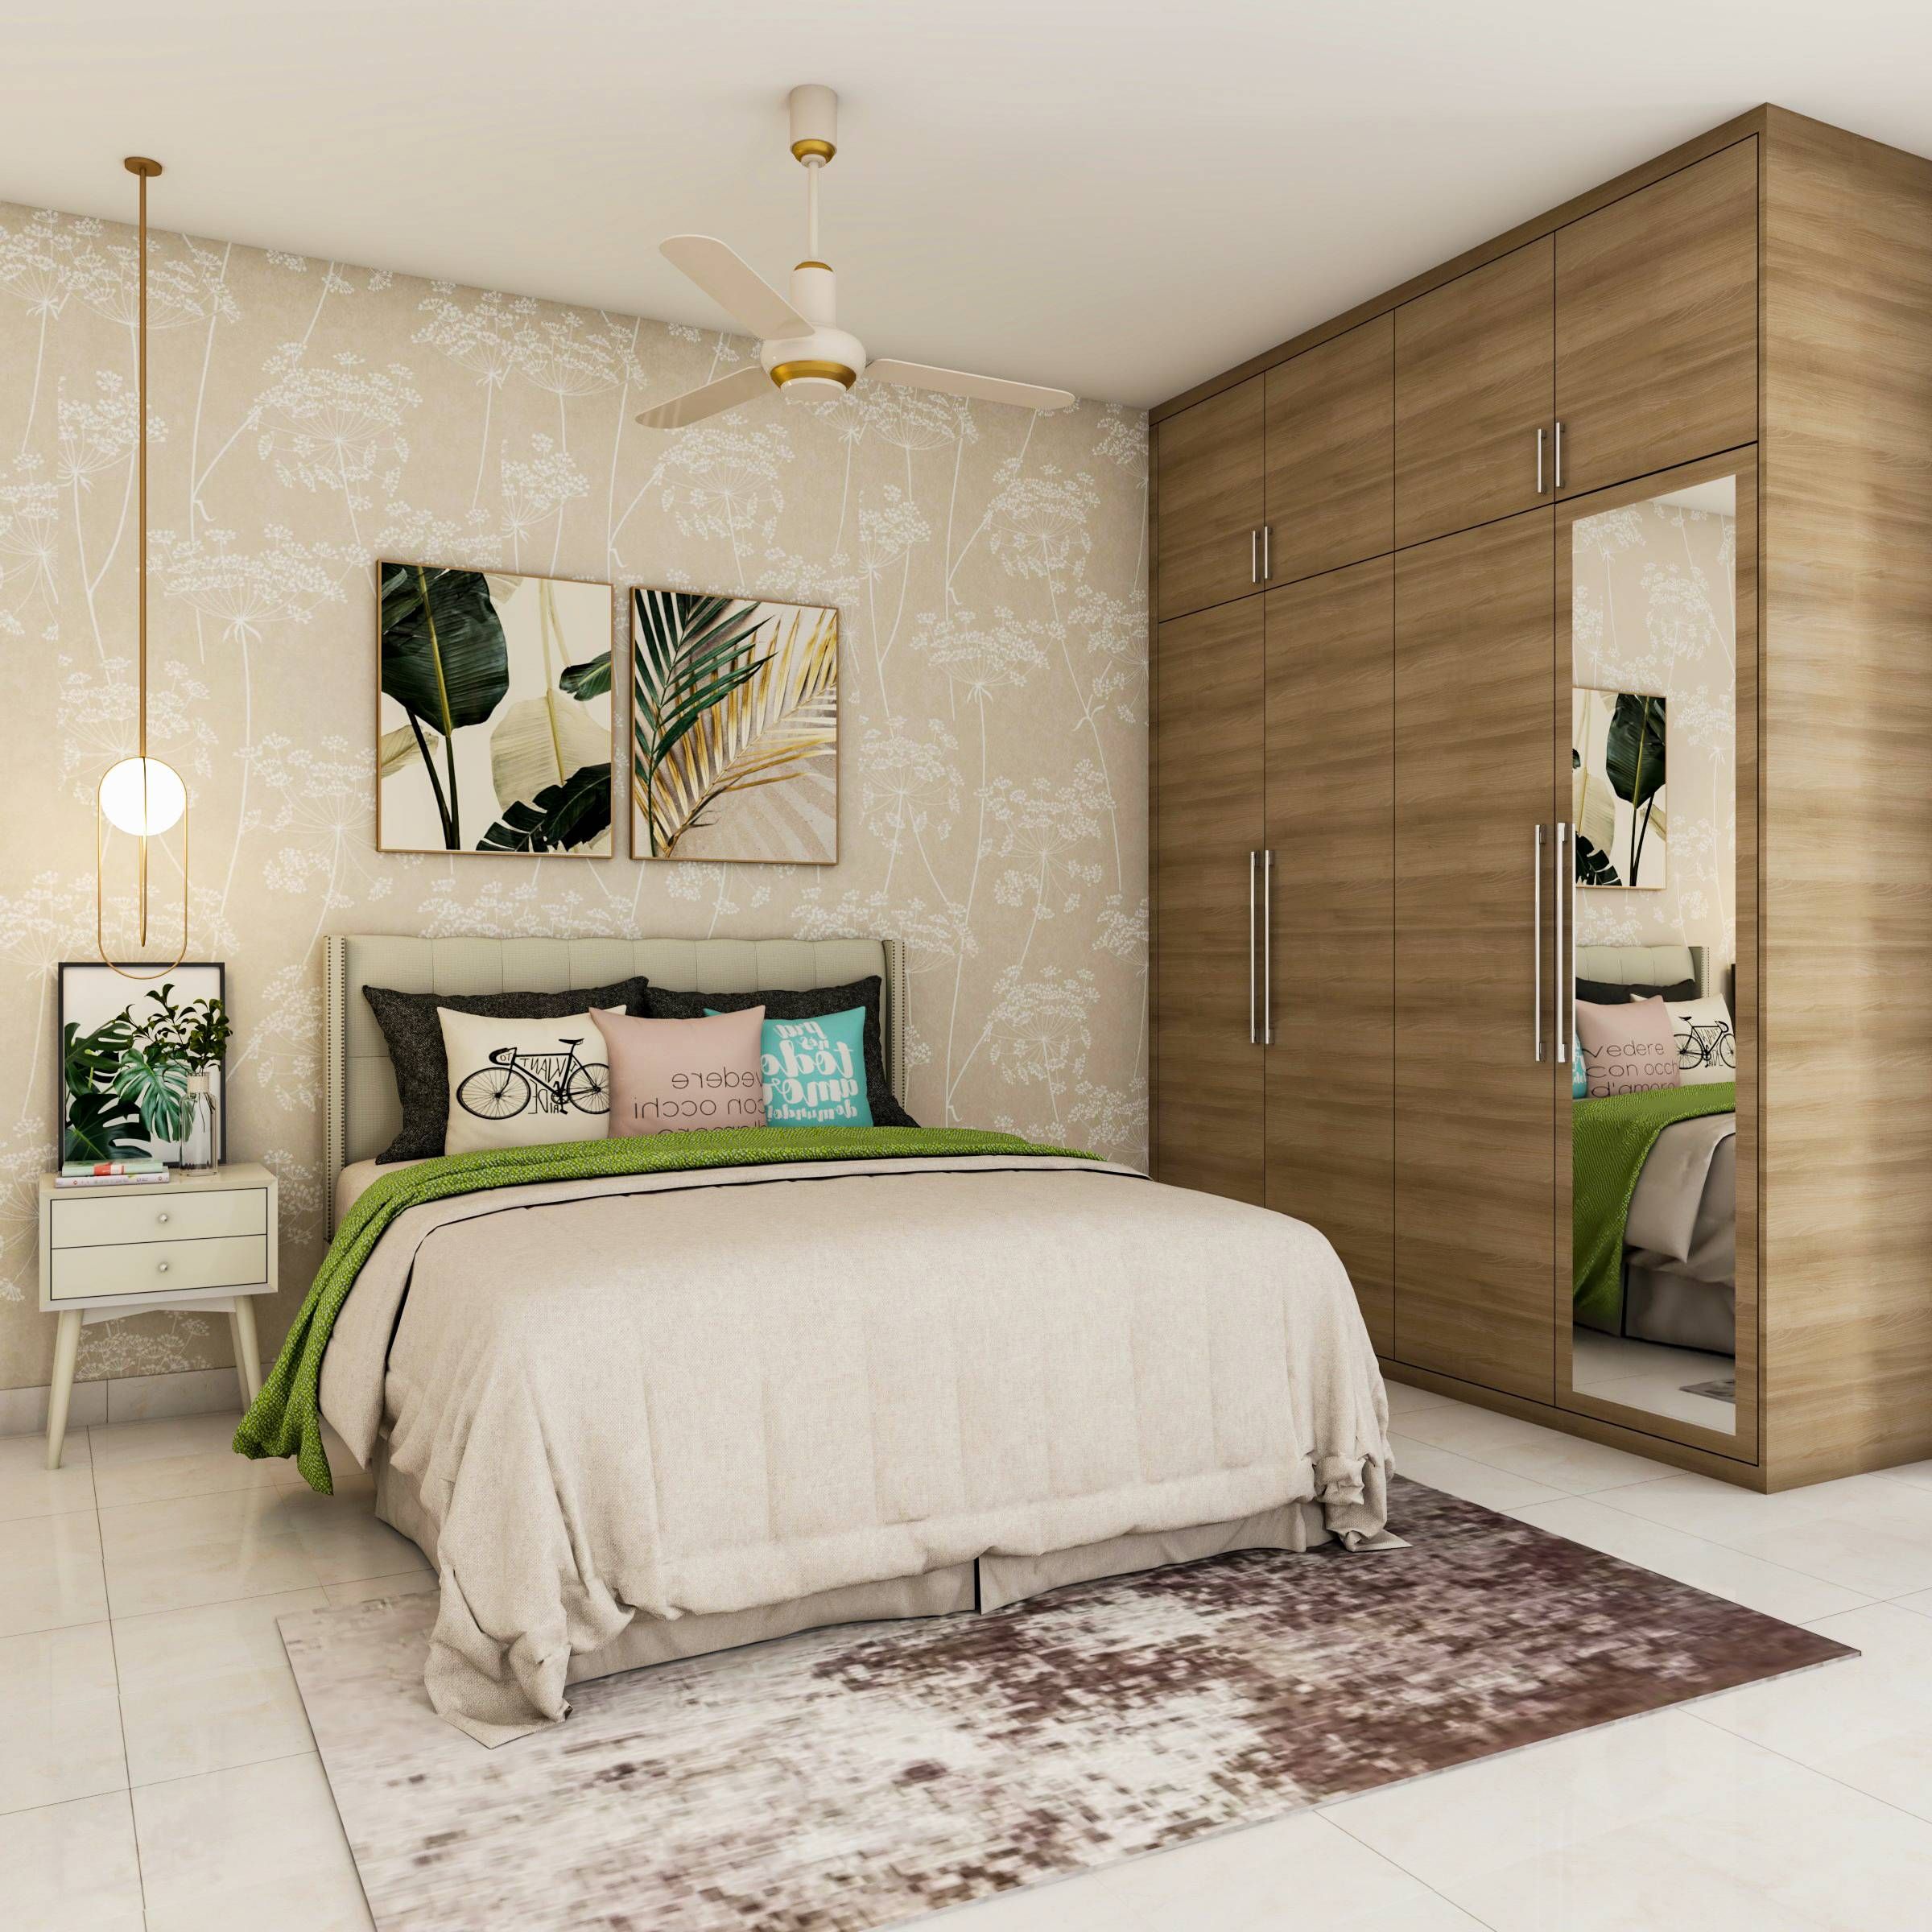 Compact Master Bedroom Design With Beige Bed